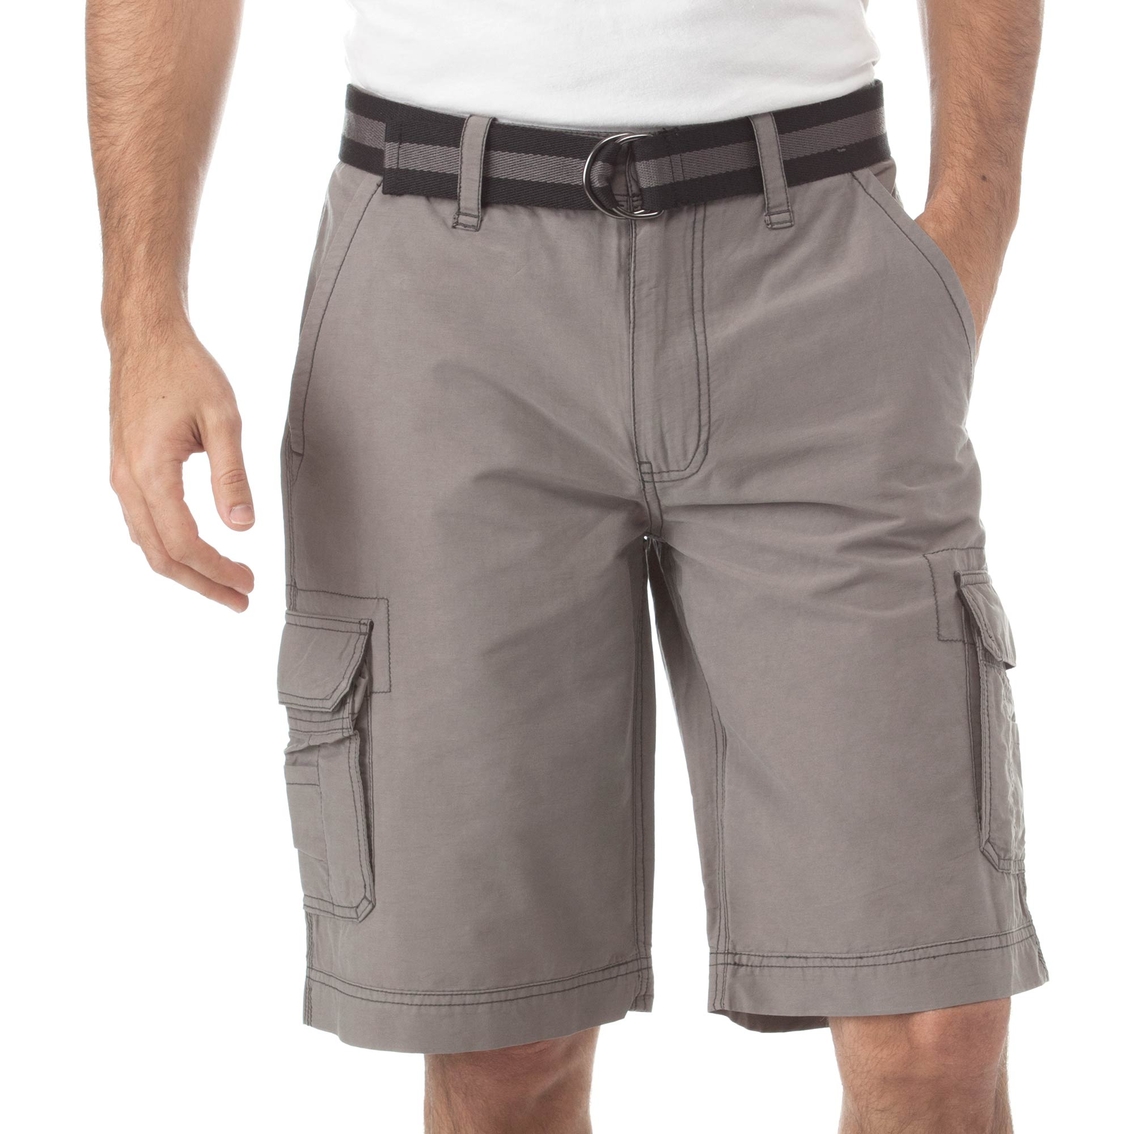 Cotton Nylon Shorts 79